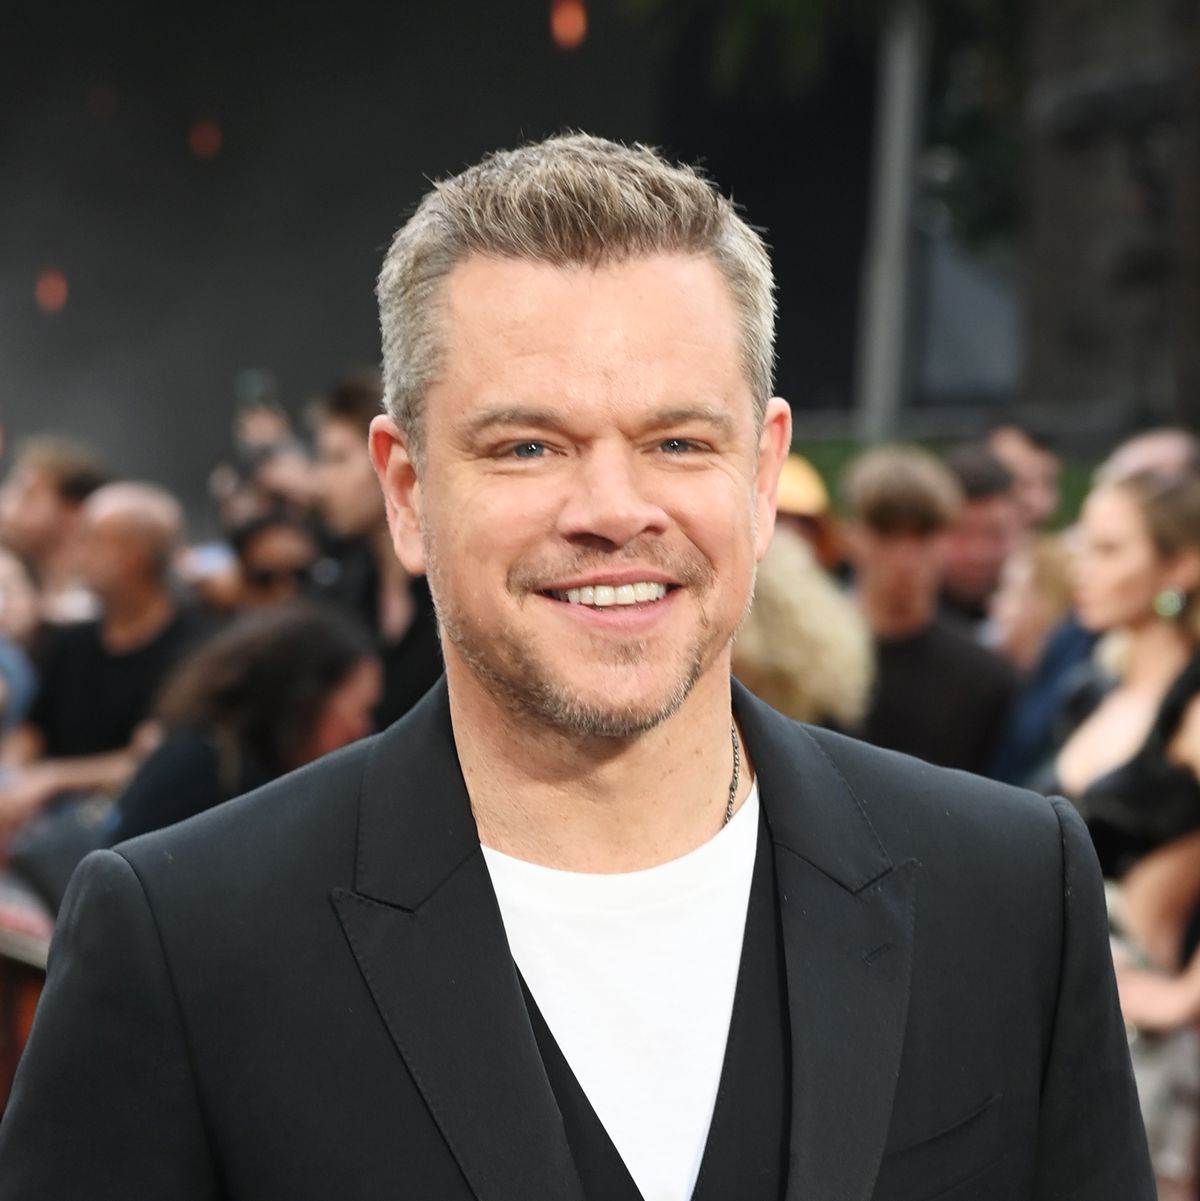 Matt Damon: Biography, Actor, Academy Award Winner